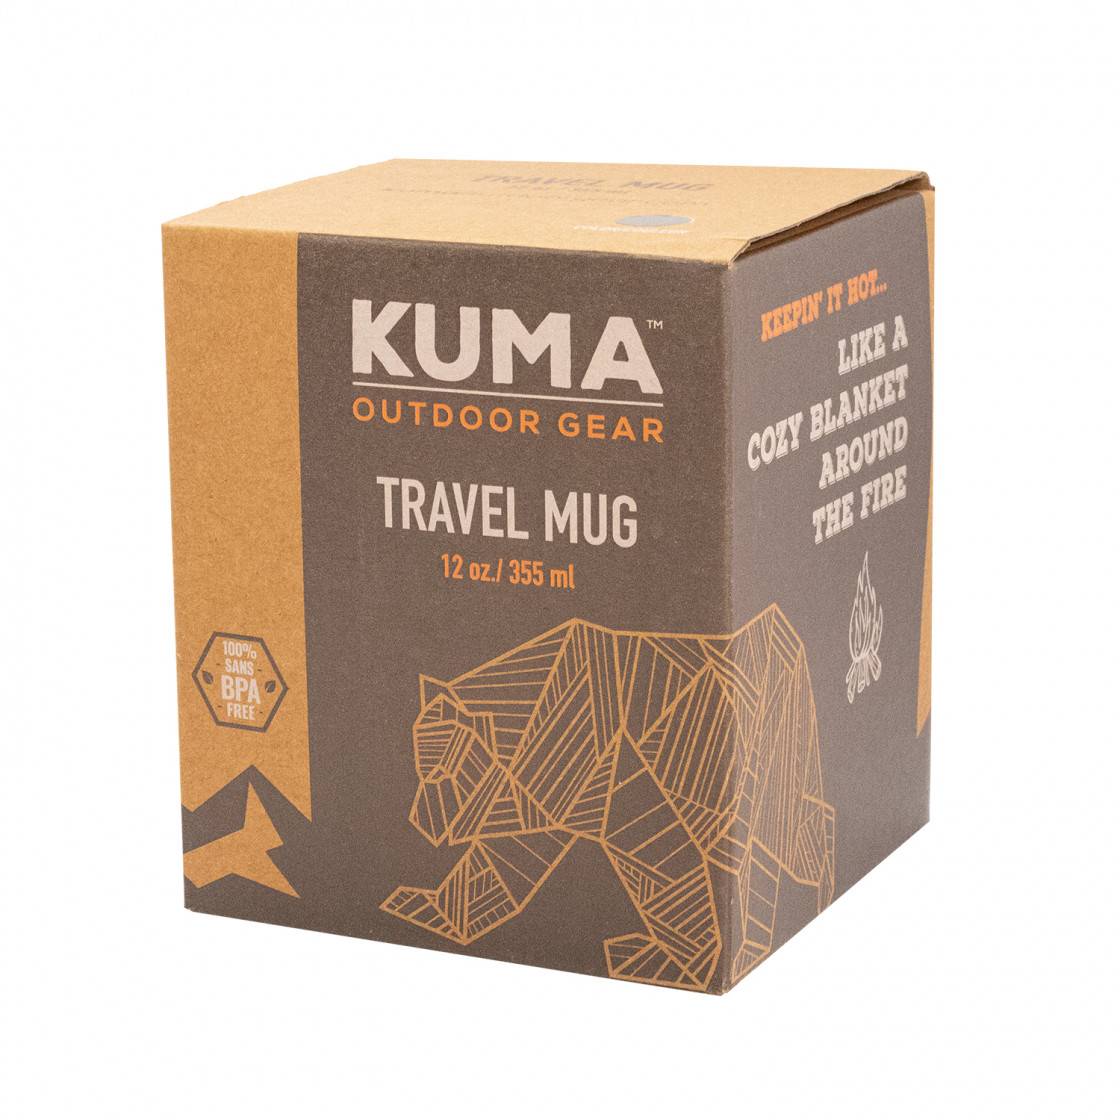 Kuma Outdoor Gear Qualifies for Free Shipping Kuma Outdoor Gear Travel Mug 12 oz White #KM-TM-WH